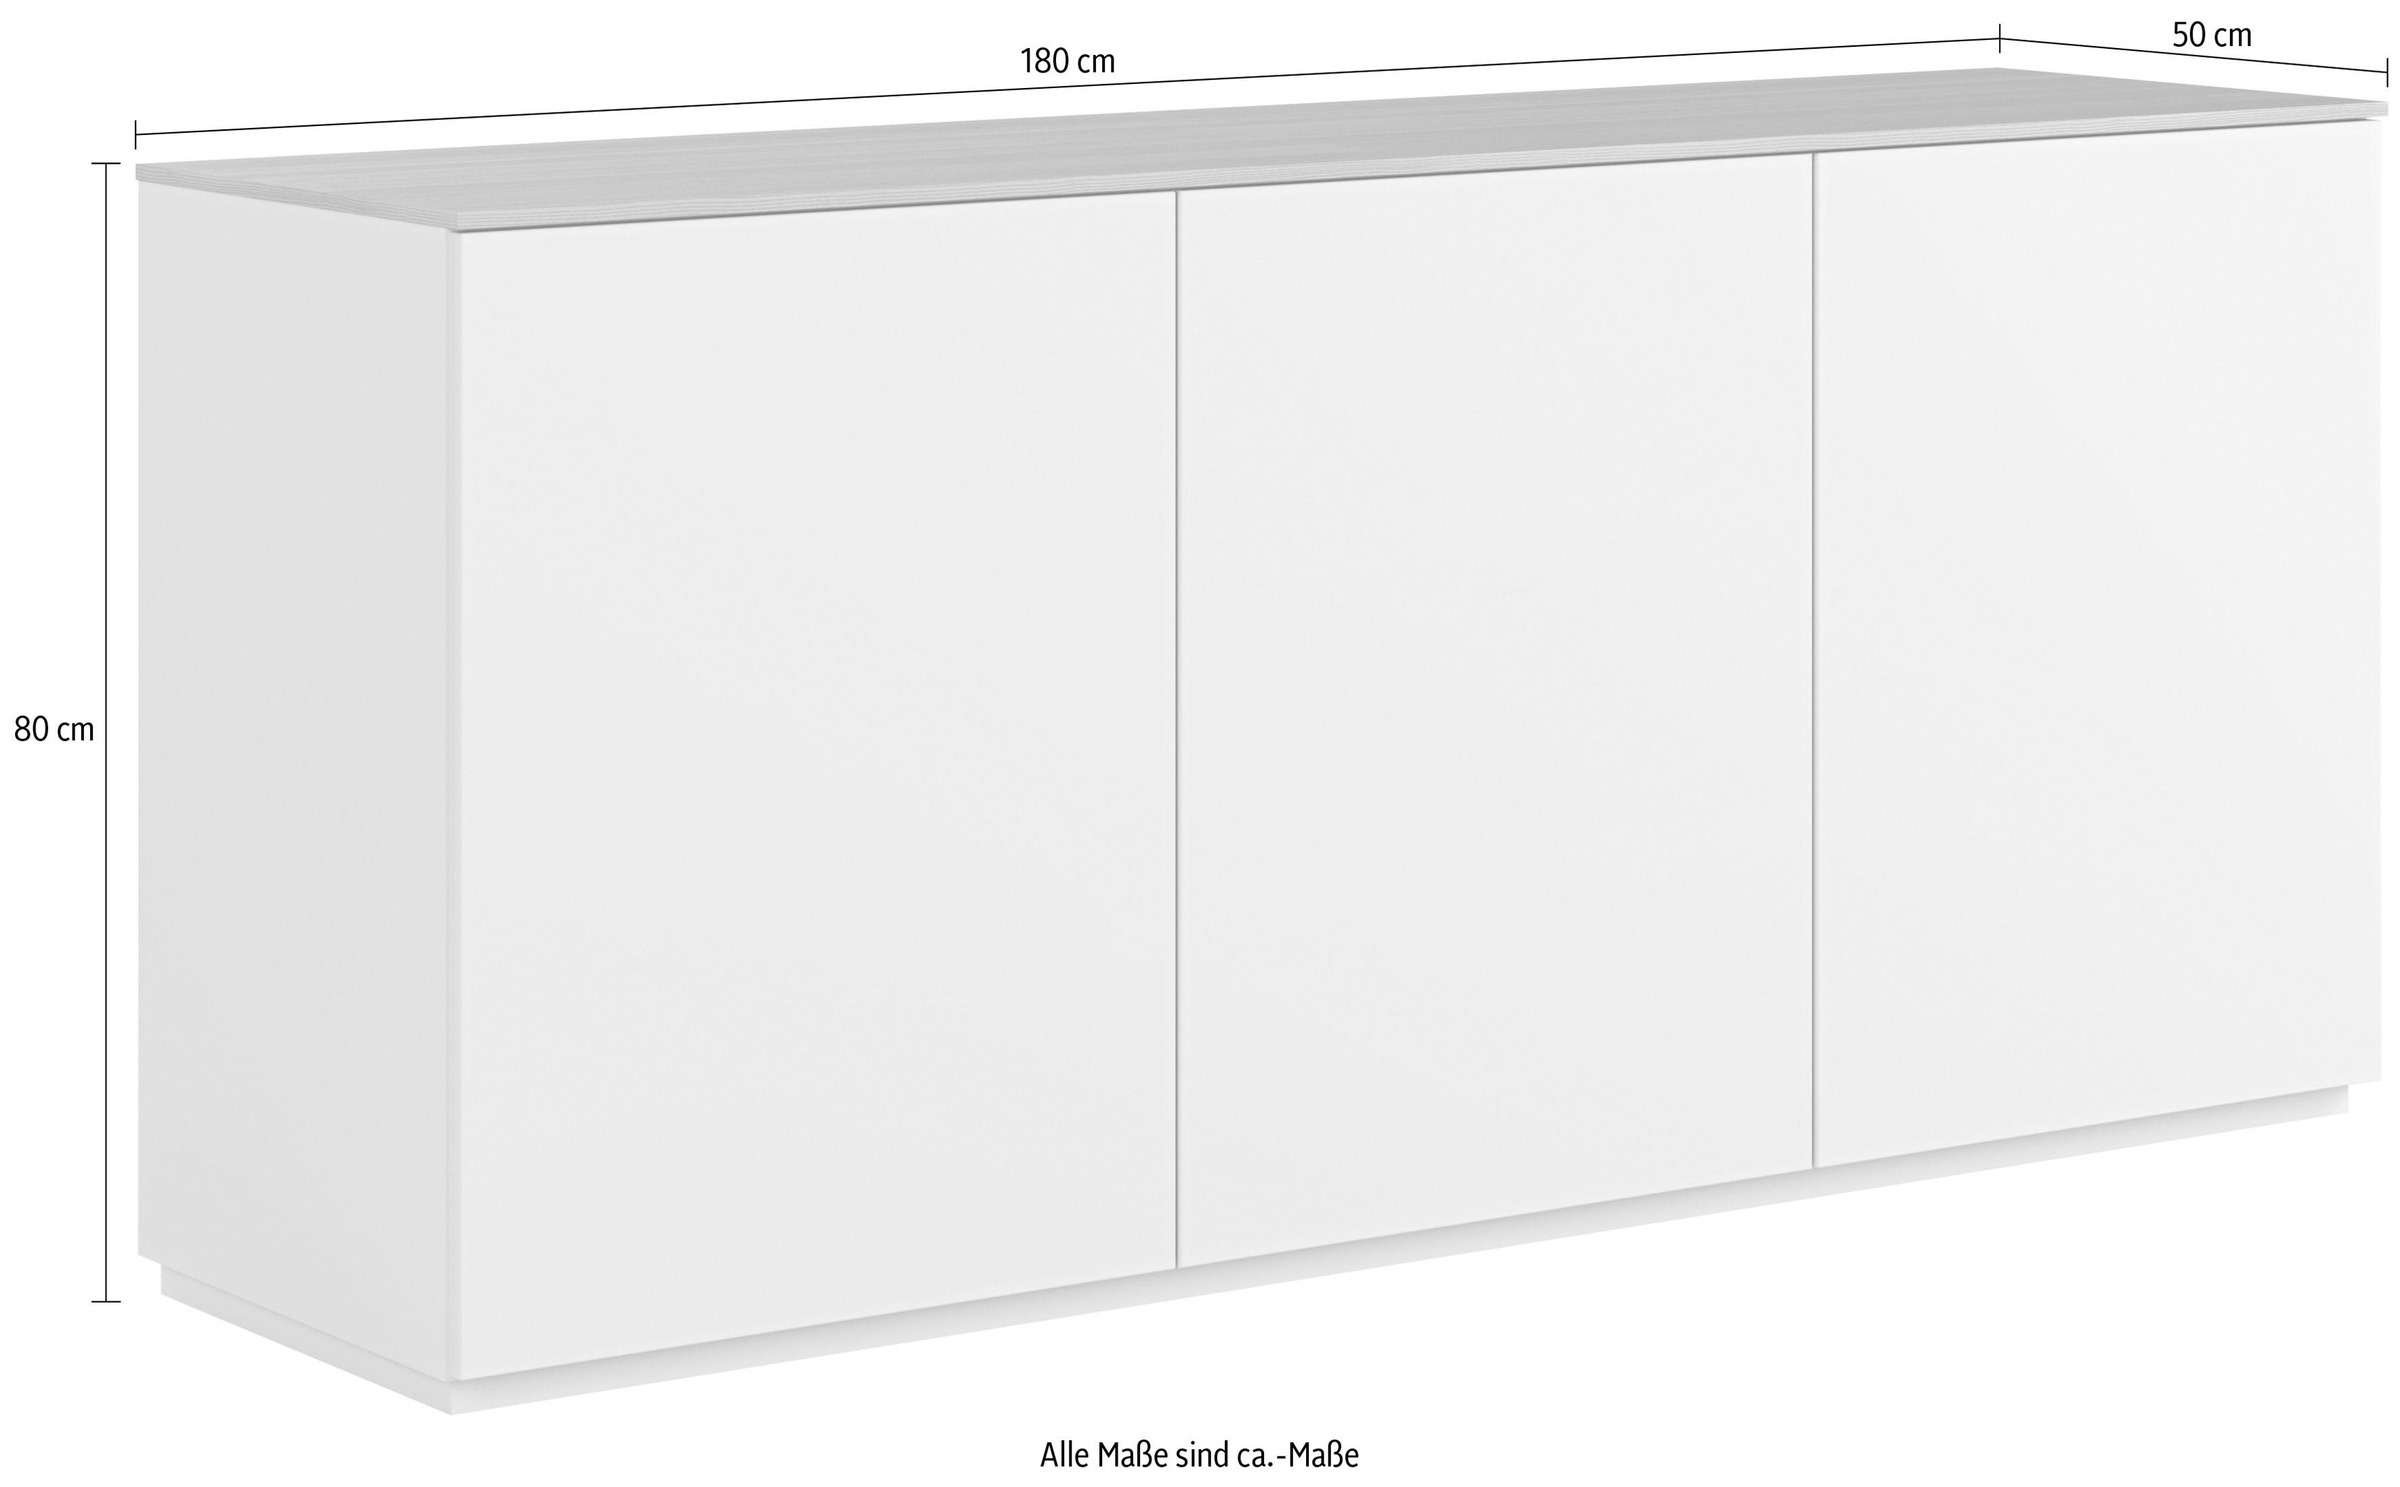 TemaHome Sideboard »Join«, Push-to-Open-Funktion, aus schöner Honeycomb-Bauweise, Breite 180 cm